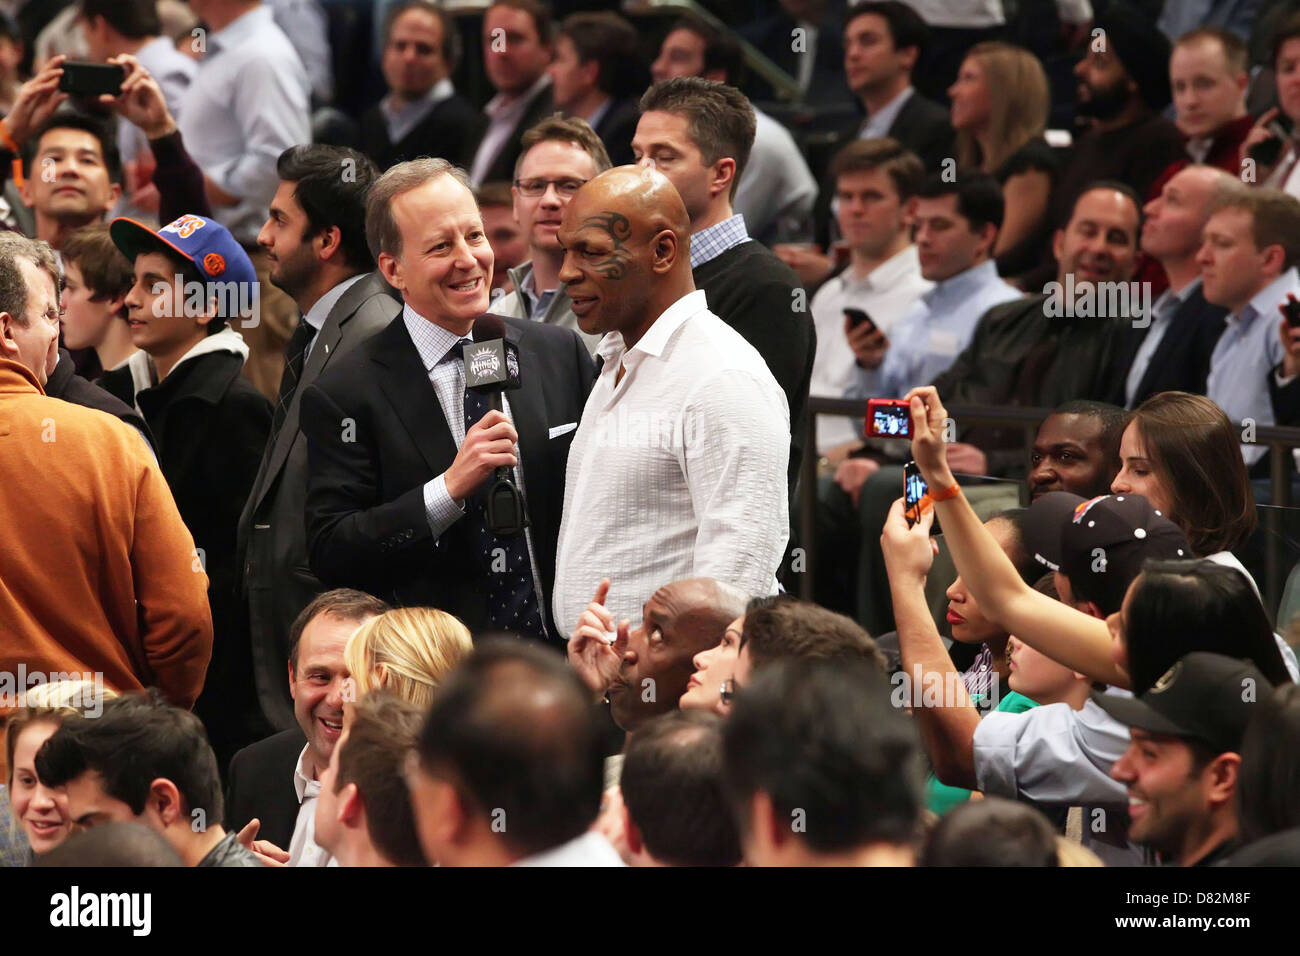 Mike Tyson New York Knicks Vs Sacramento Kings at Madison Square Garden New York City, USA - 15.02.12 Stock Photo